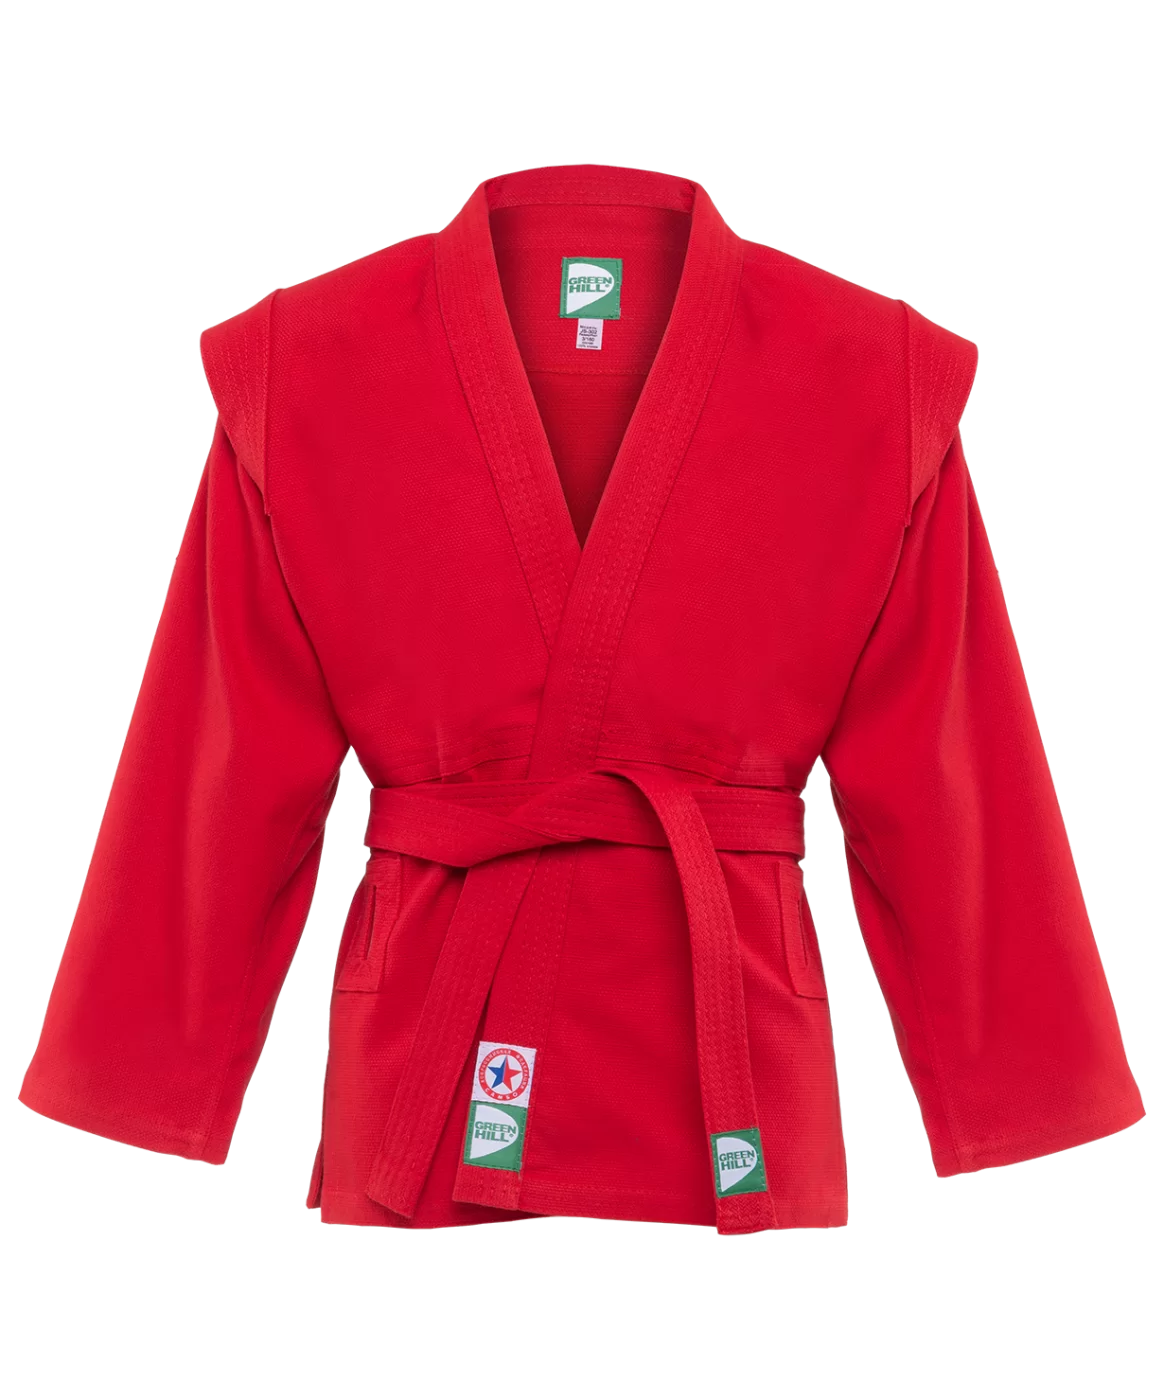 Фото Куртка для самбо JS-302, красная, р.6/190 со склада магазина СпортСЕ